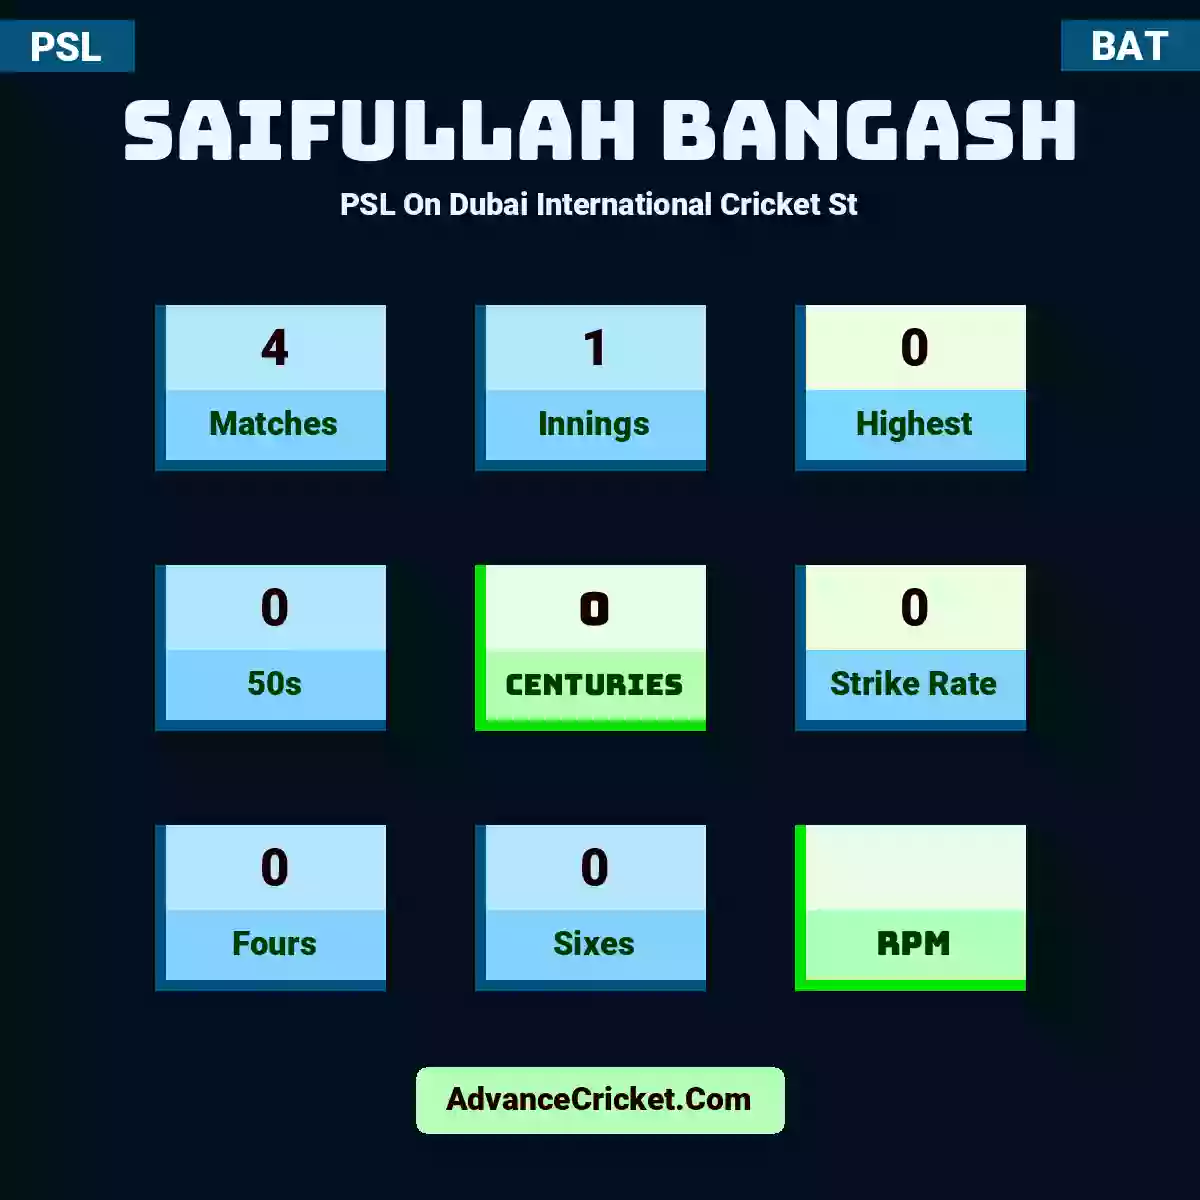 Saifullah Bangash PSL  On Dubai International Cricket St, Saifullah Bangash played 4 matches, scored 0 runs as highest, 0 half-centuries, and 0 centuries, with a strike rate of 0. S.Bangash hit 0 fours and 0 sixes.